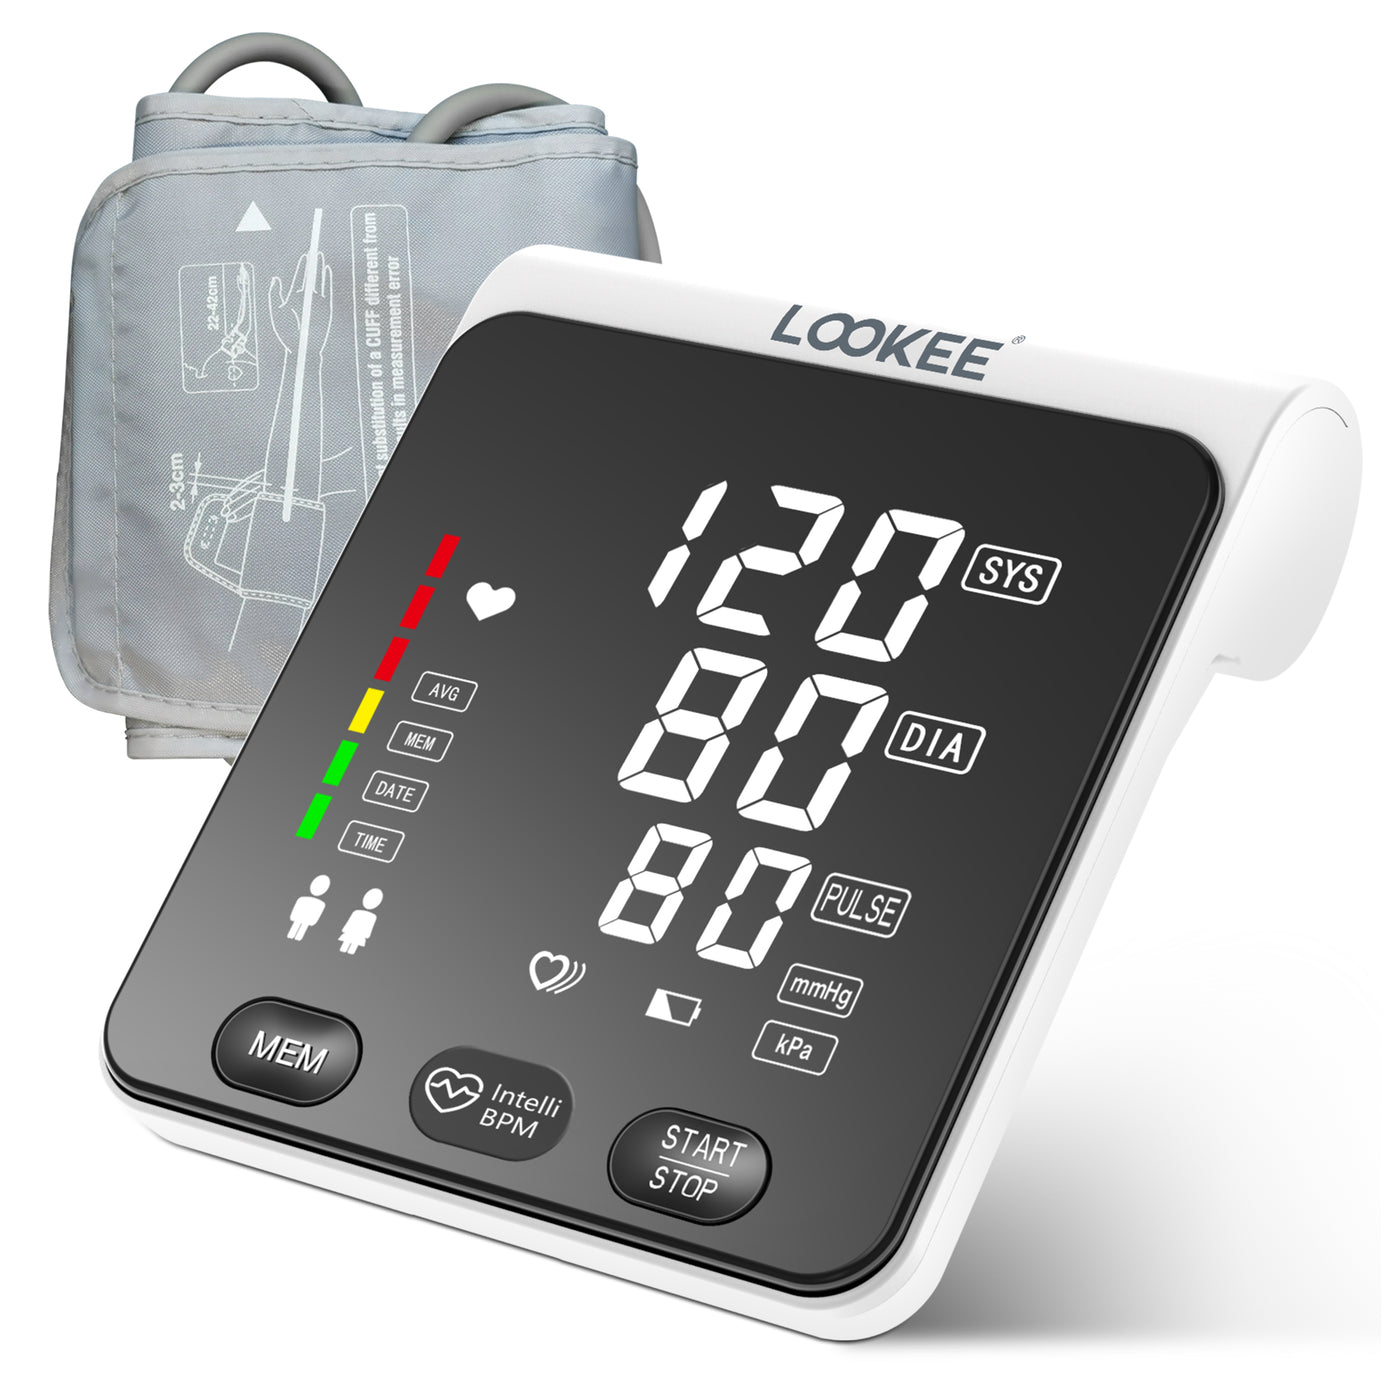 Automatic Digital Upper Arm Blood Pressure Meter Portable BP